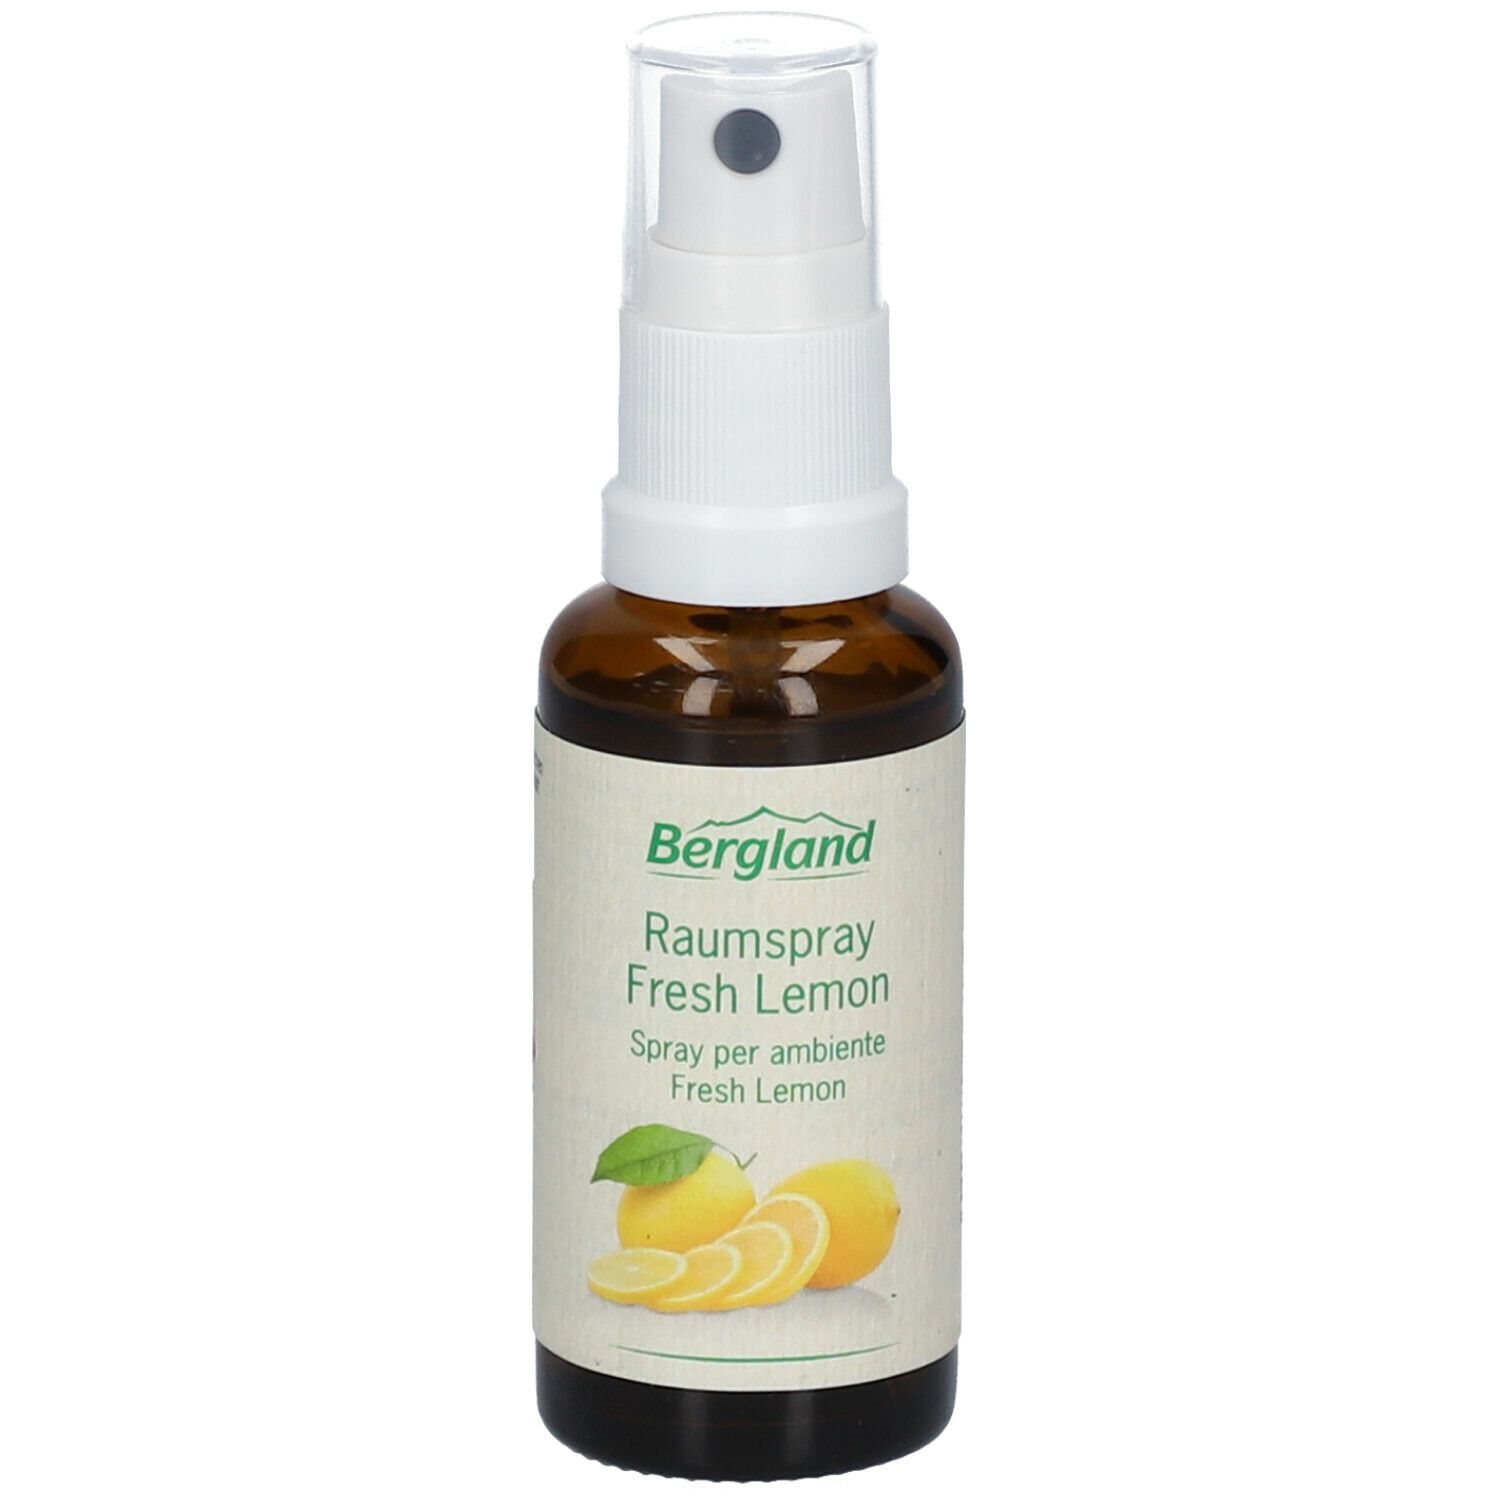 Image of Bergland Raumspray Fresh Lemon